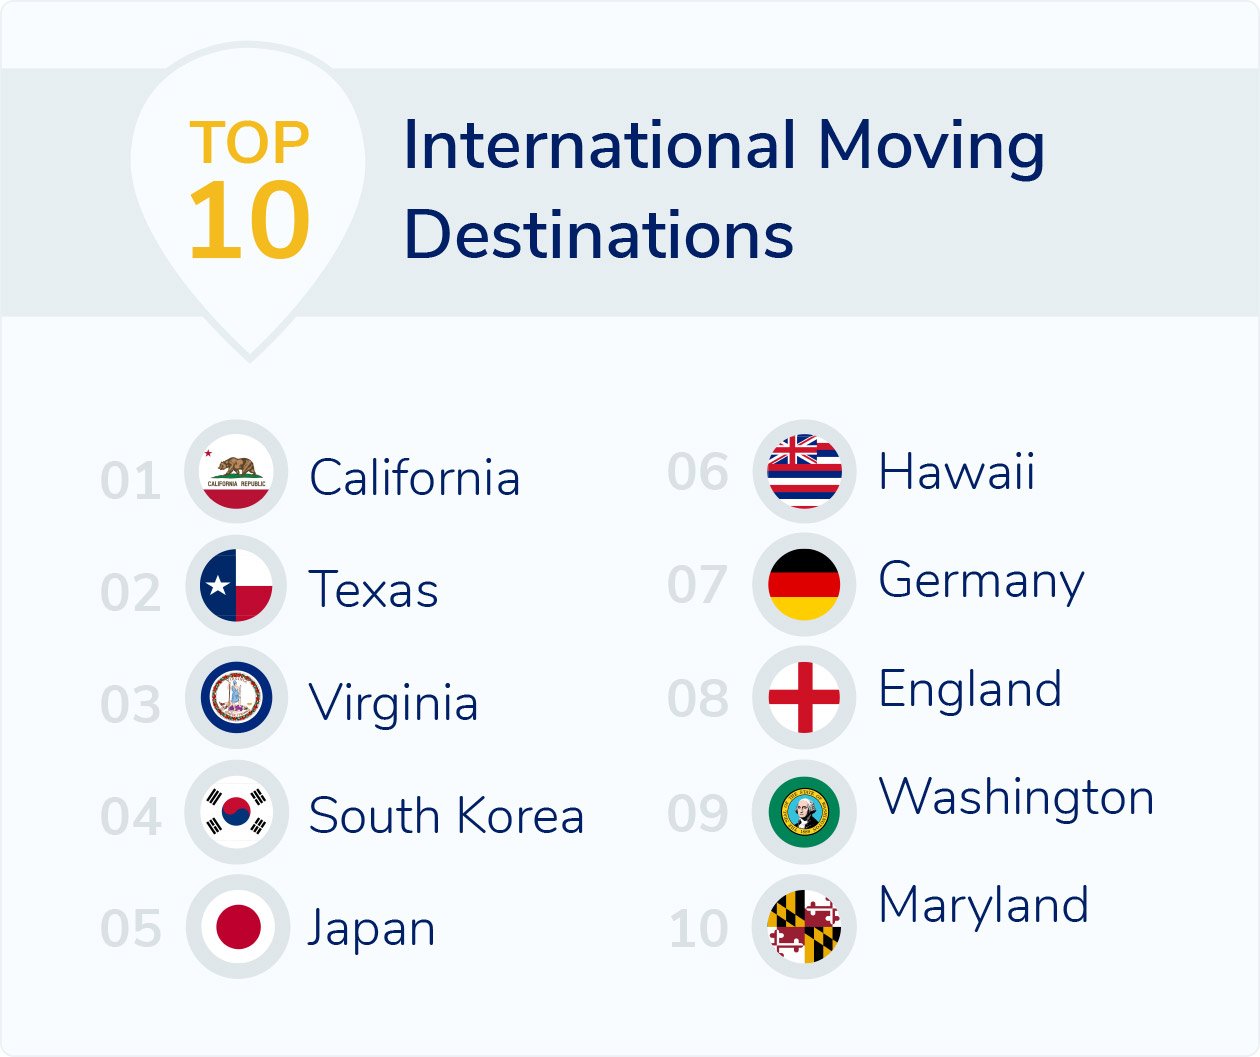 Top International Moving Destinations